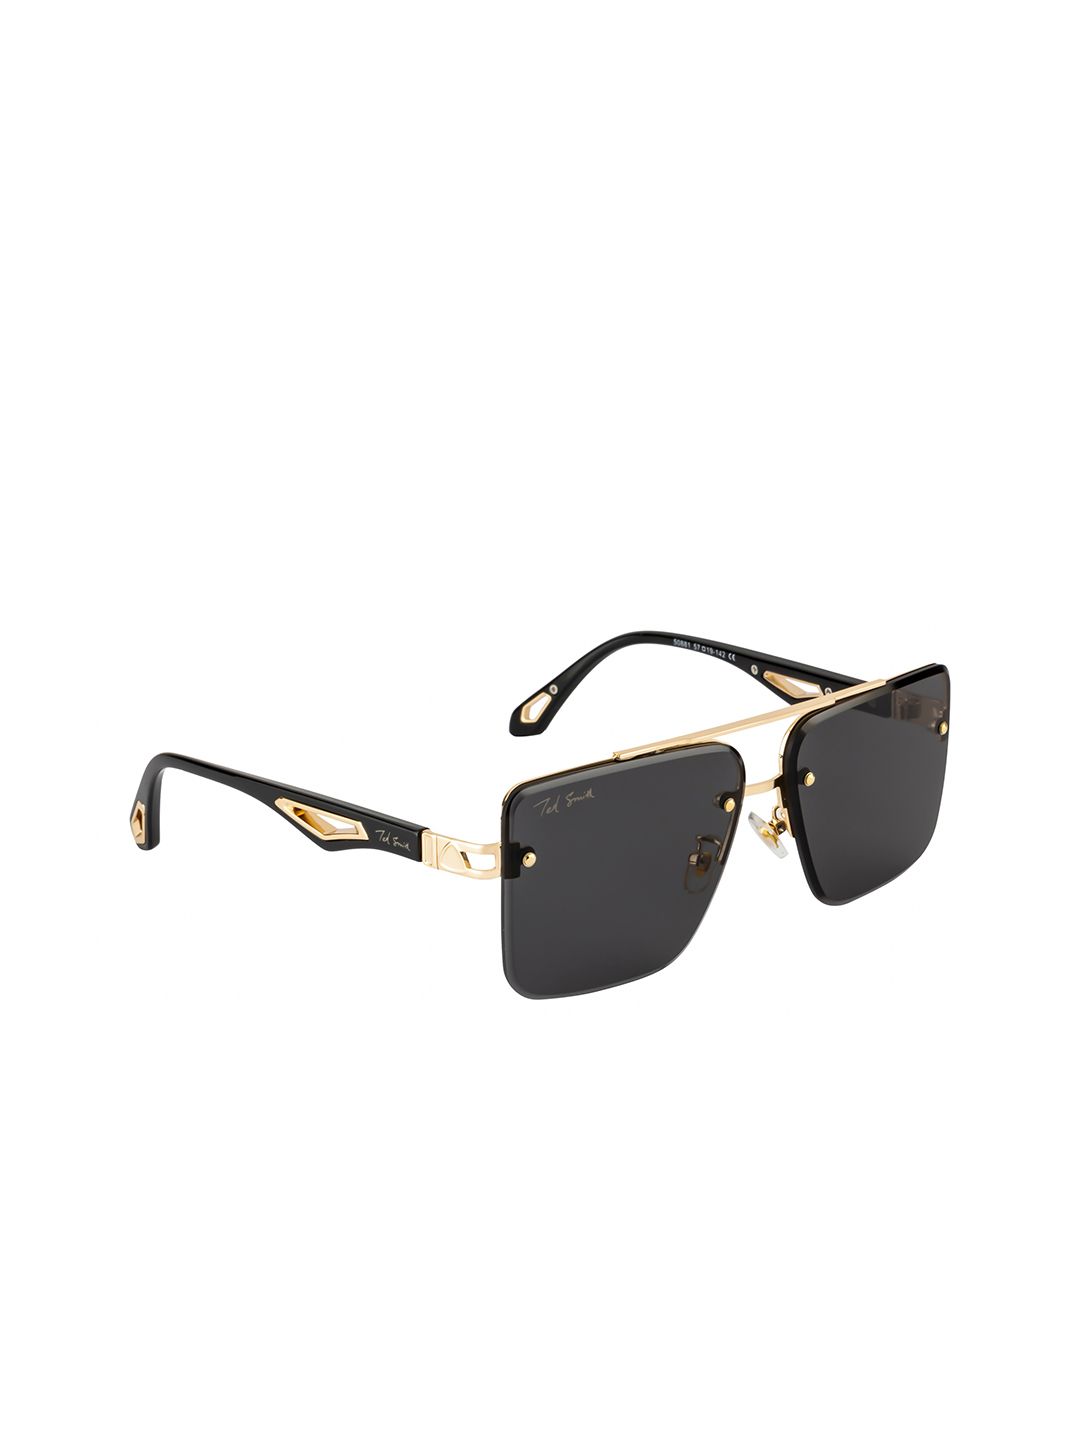 Ted Smith Unisex Black Lens & Gold-Toned Rimless Square Sunglasses HILTON_C1 Price in India